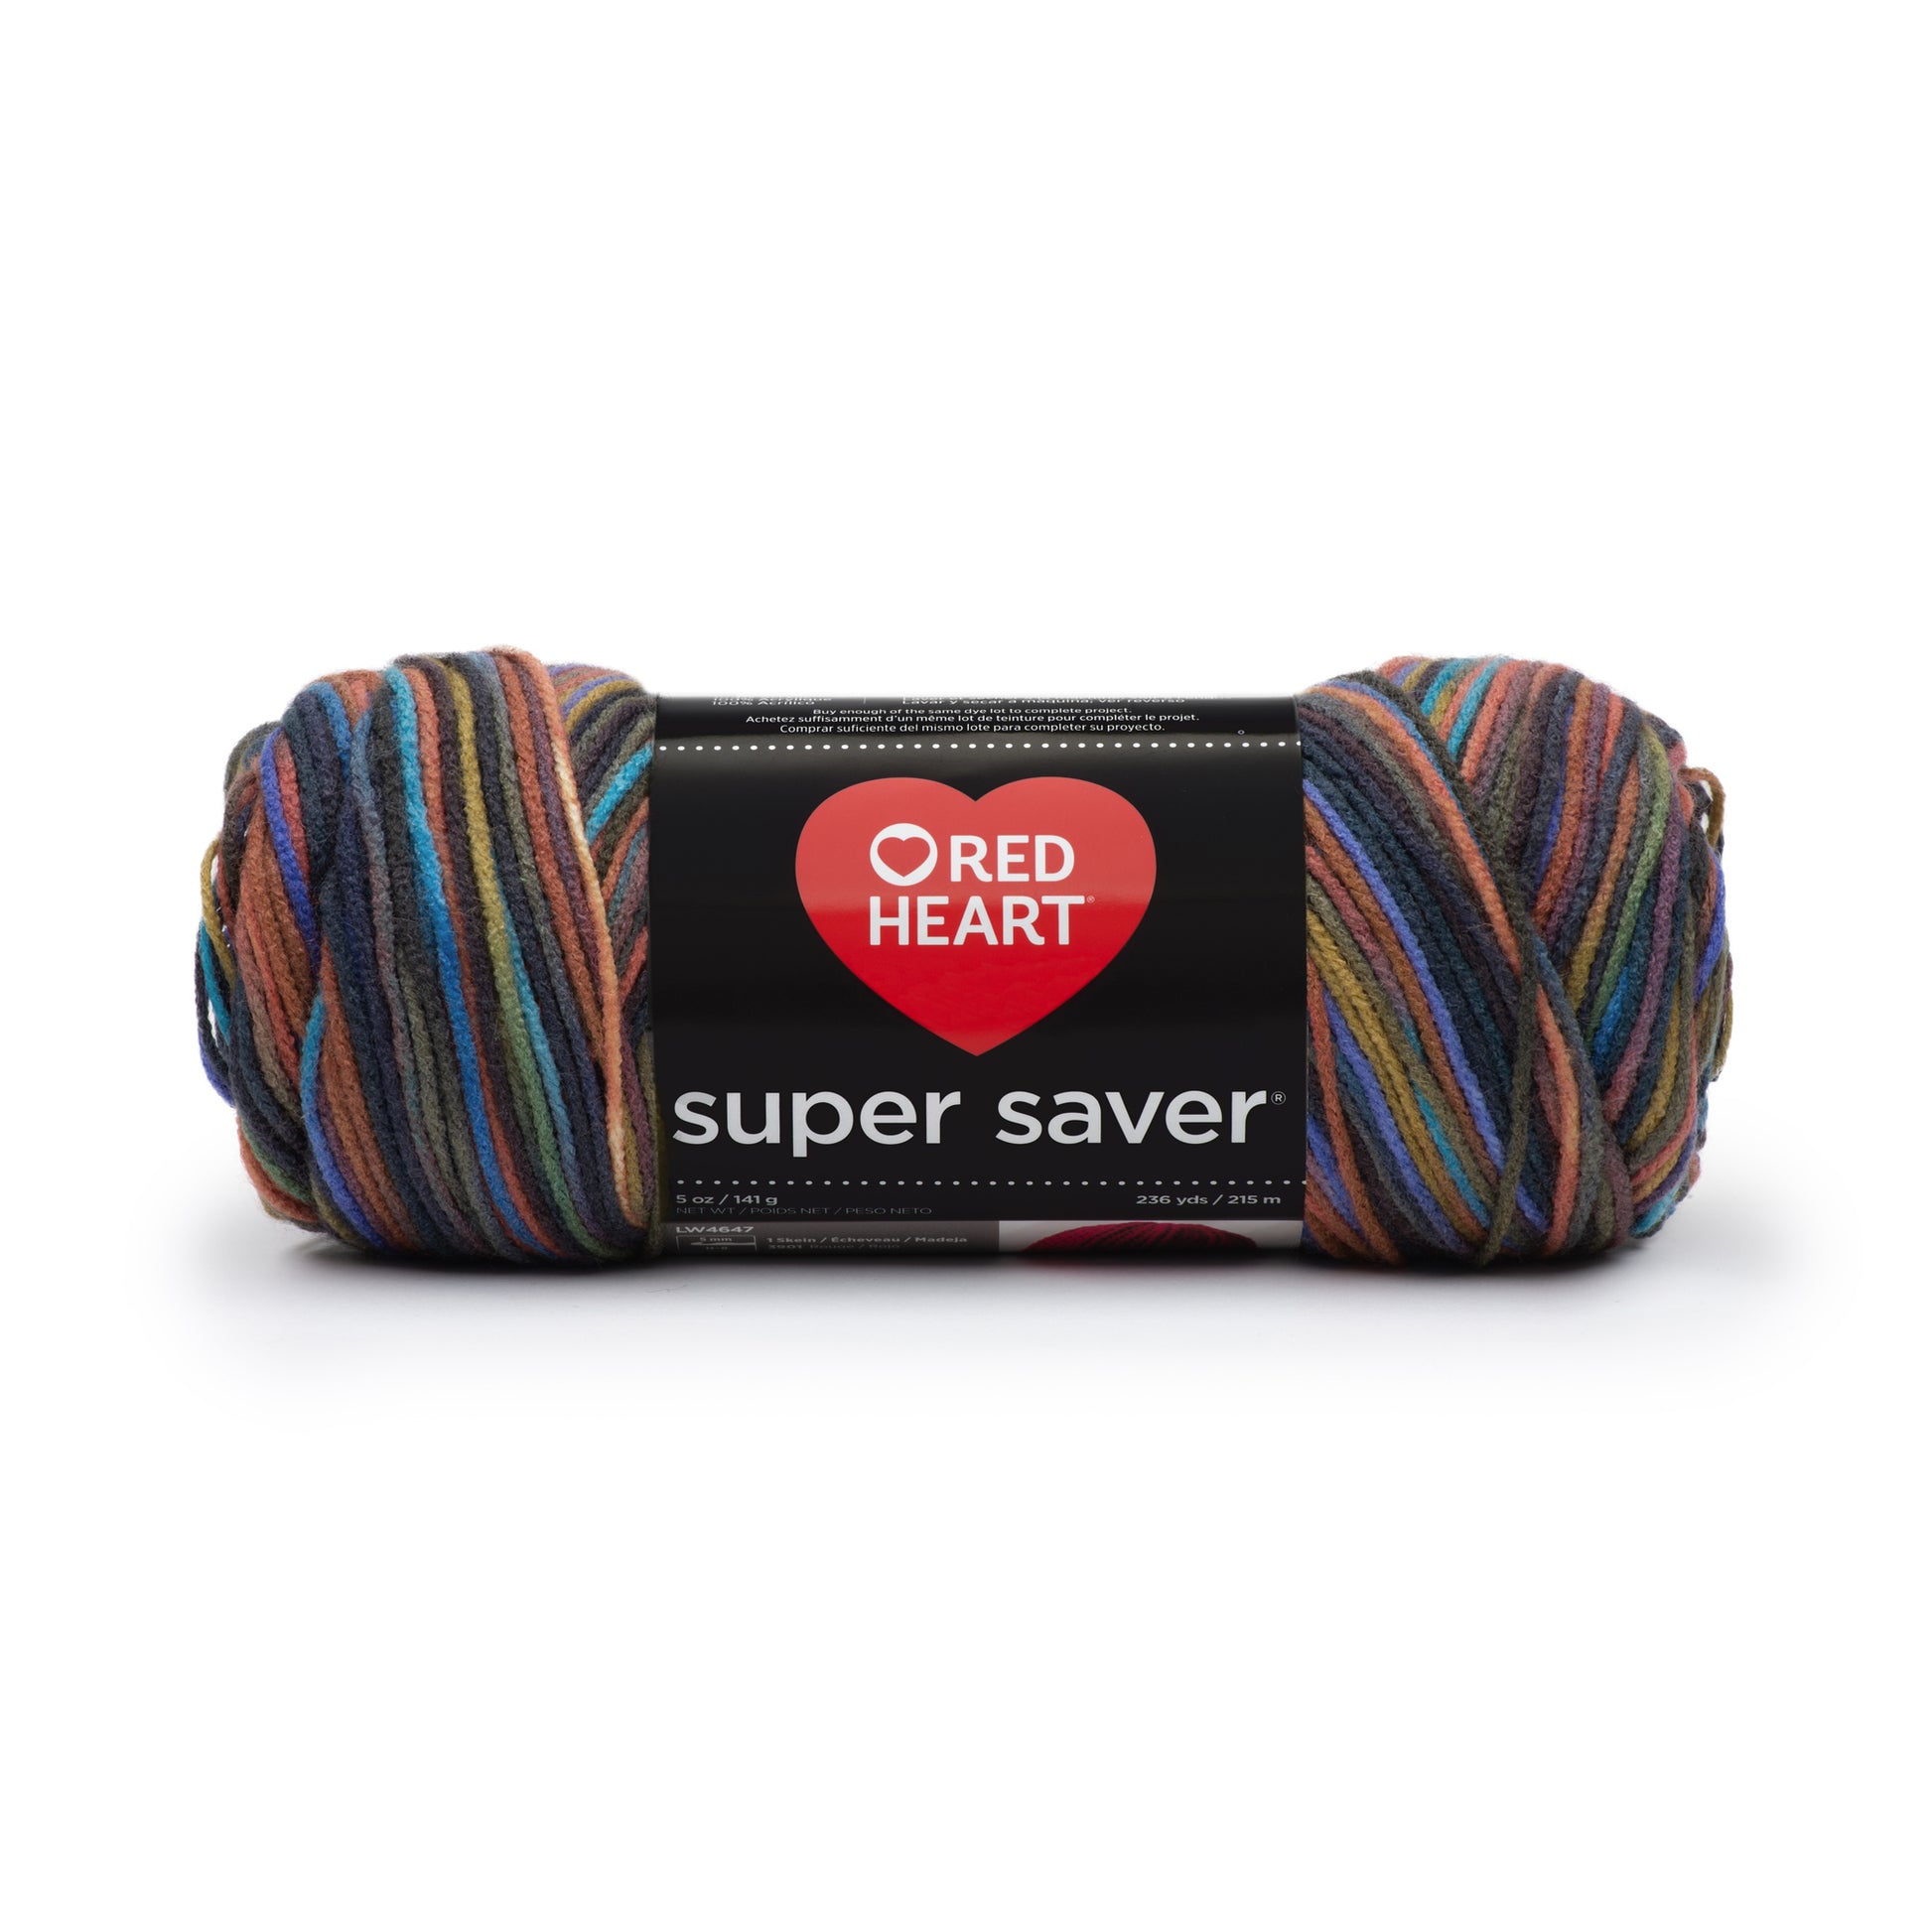 Red Heart Super Saver Yarn - Discontinued shades